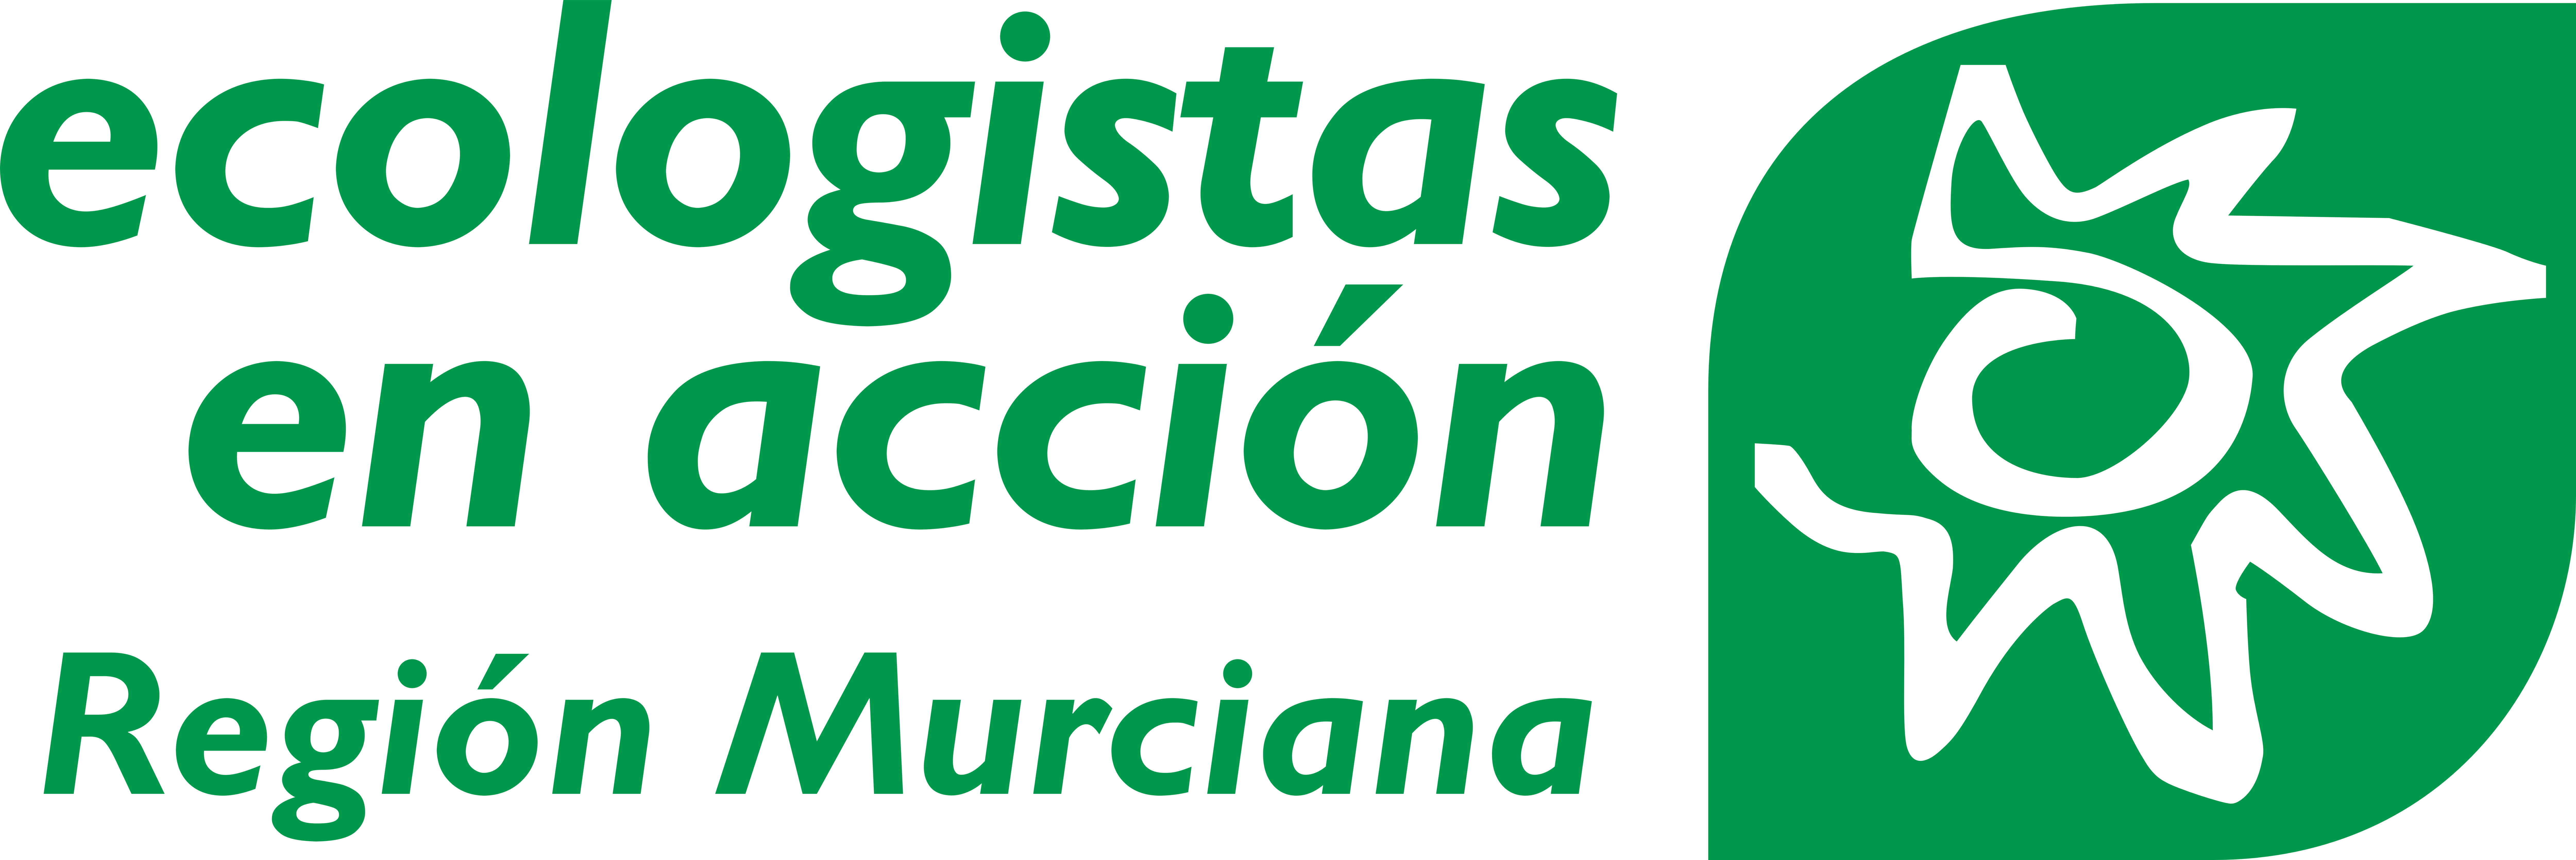 ECOLOGISTAS EN ACCION logo